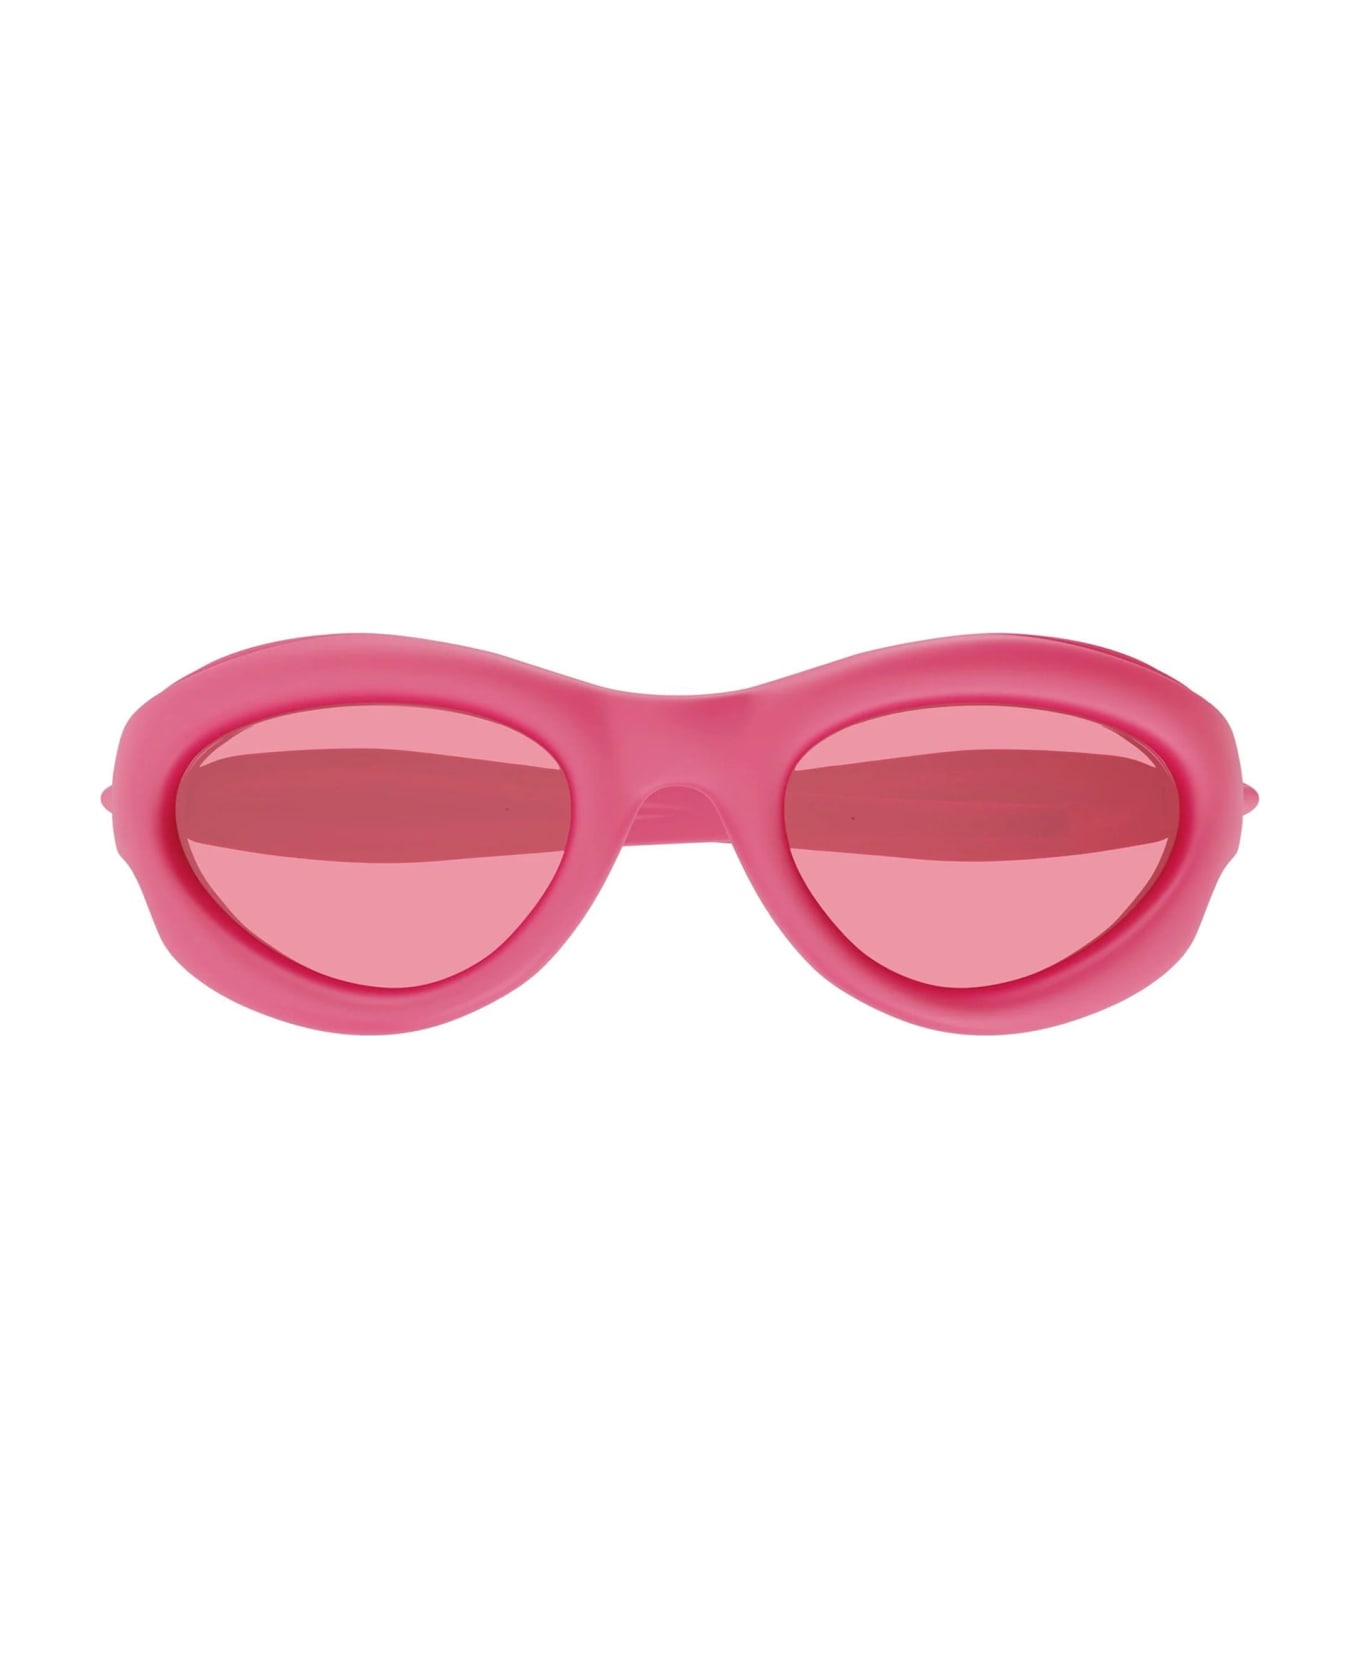 Bottega Veneta Eyewear Bv1162s-001 - Pink Sunglasses - pink サングラス